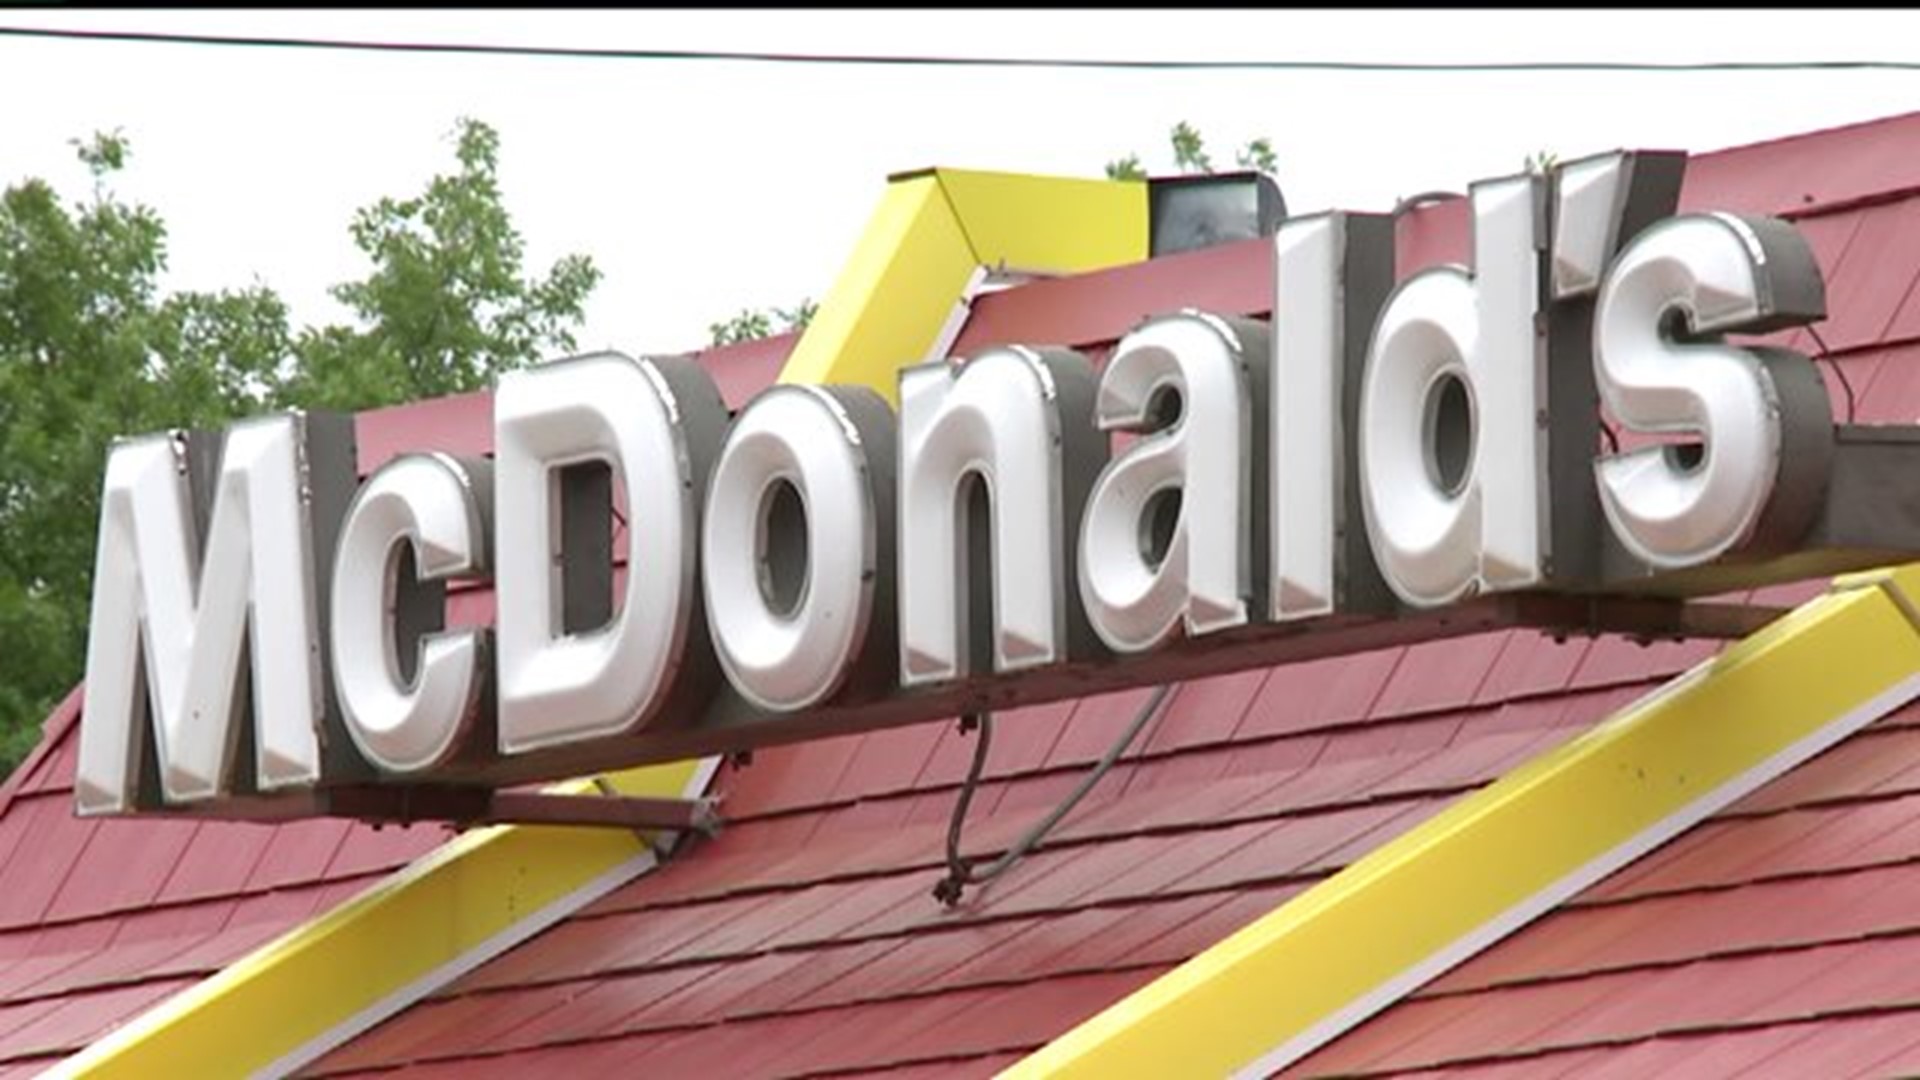 Couple claims they found marijuana in burger at Iowa restaurant